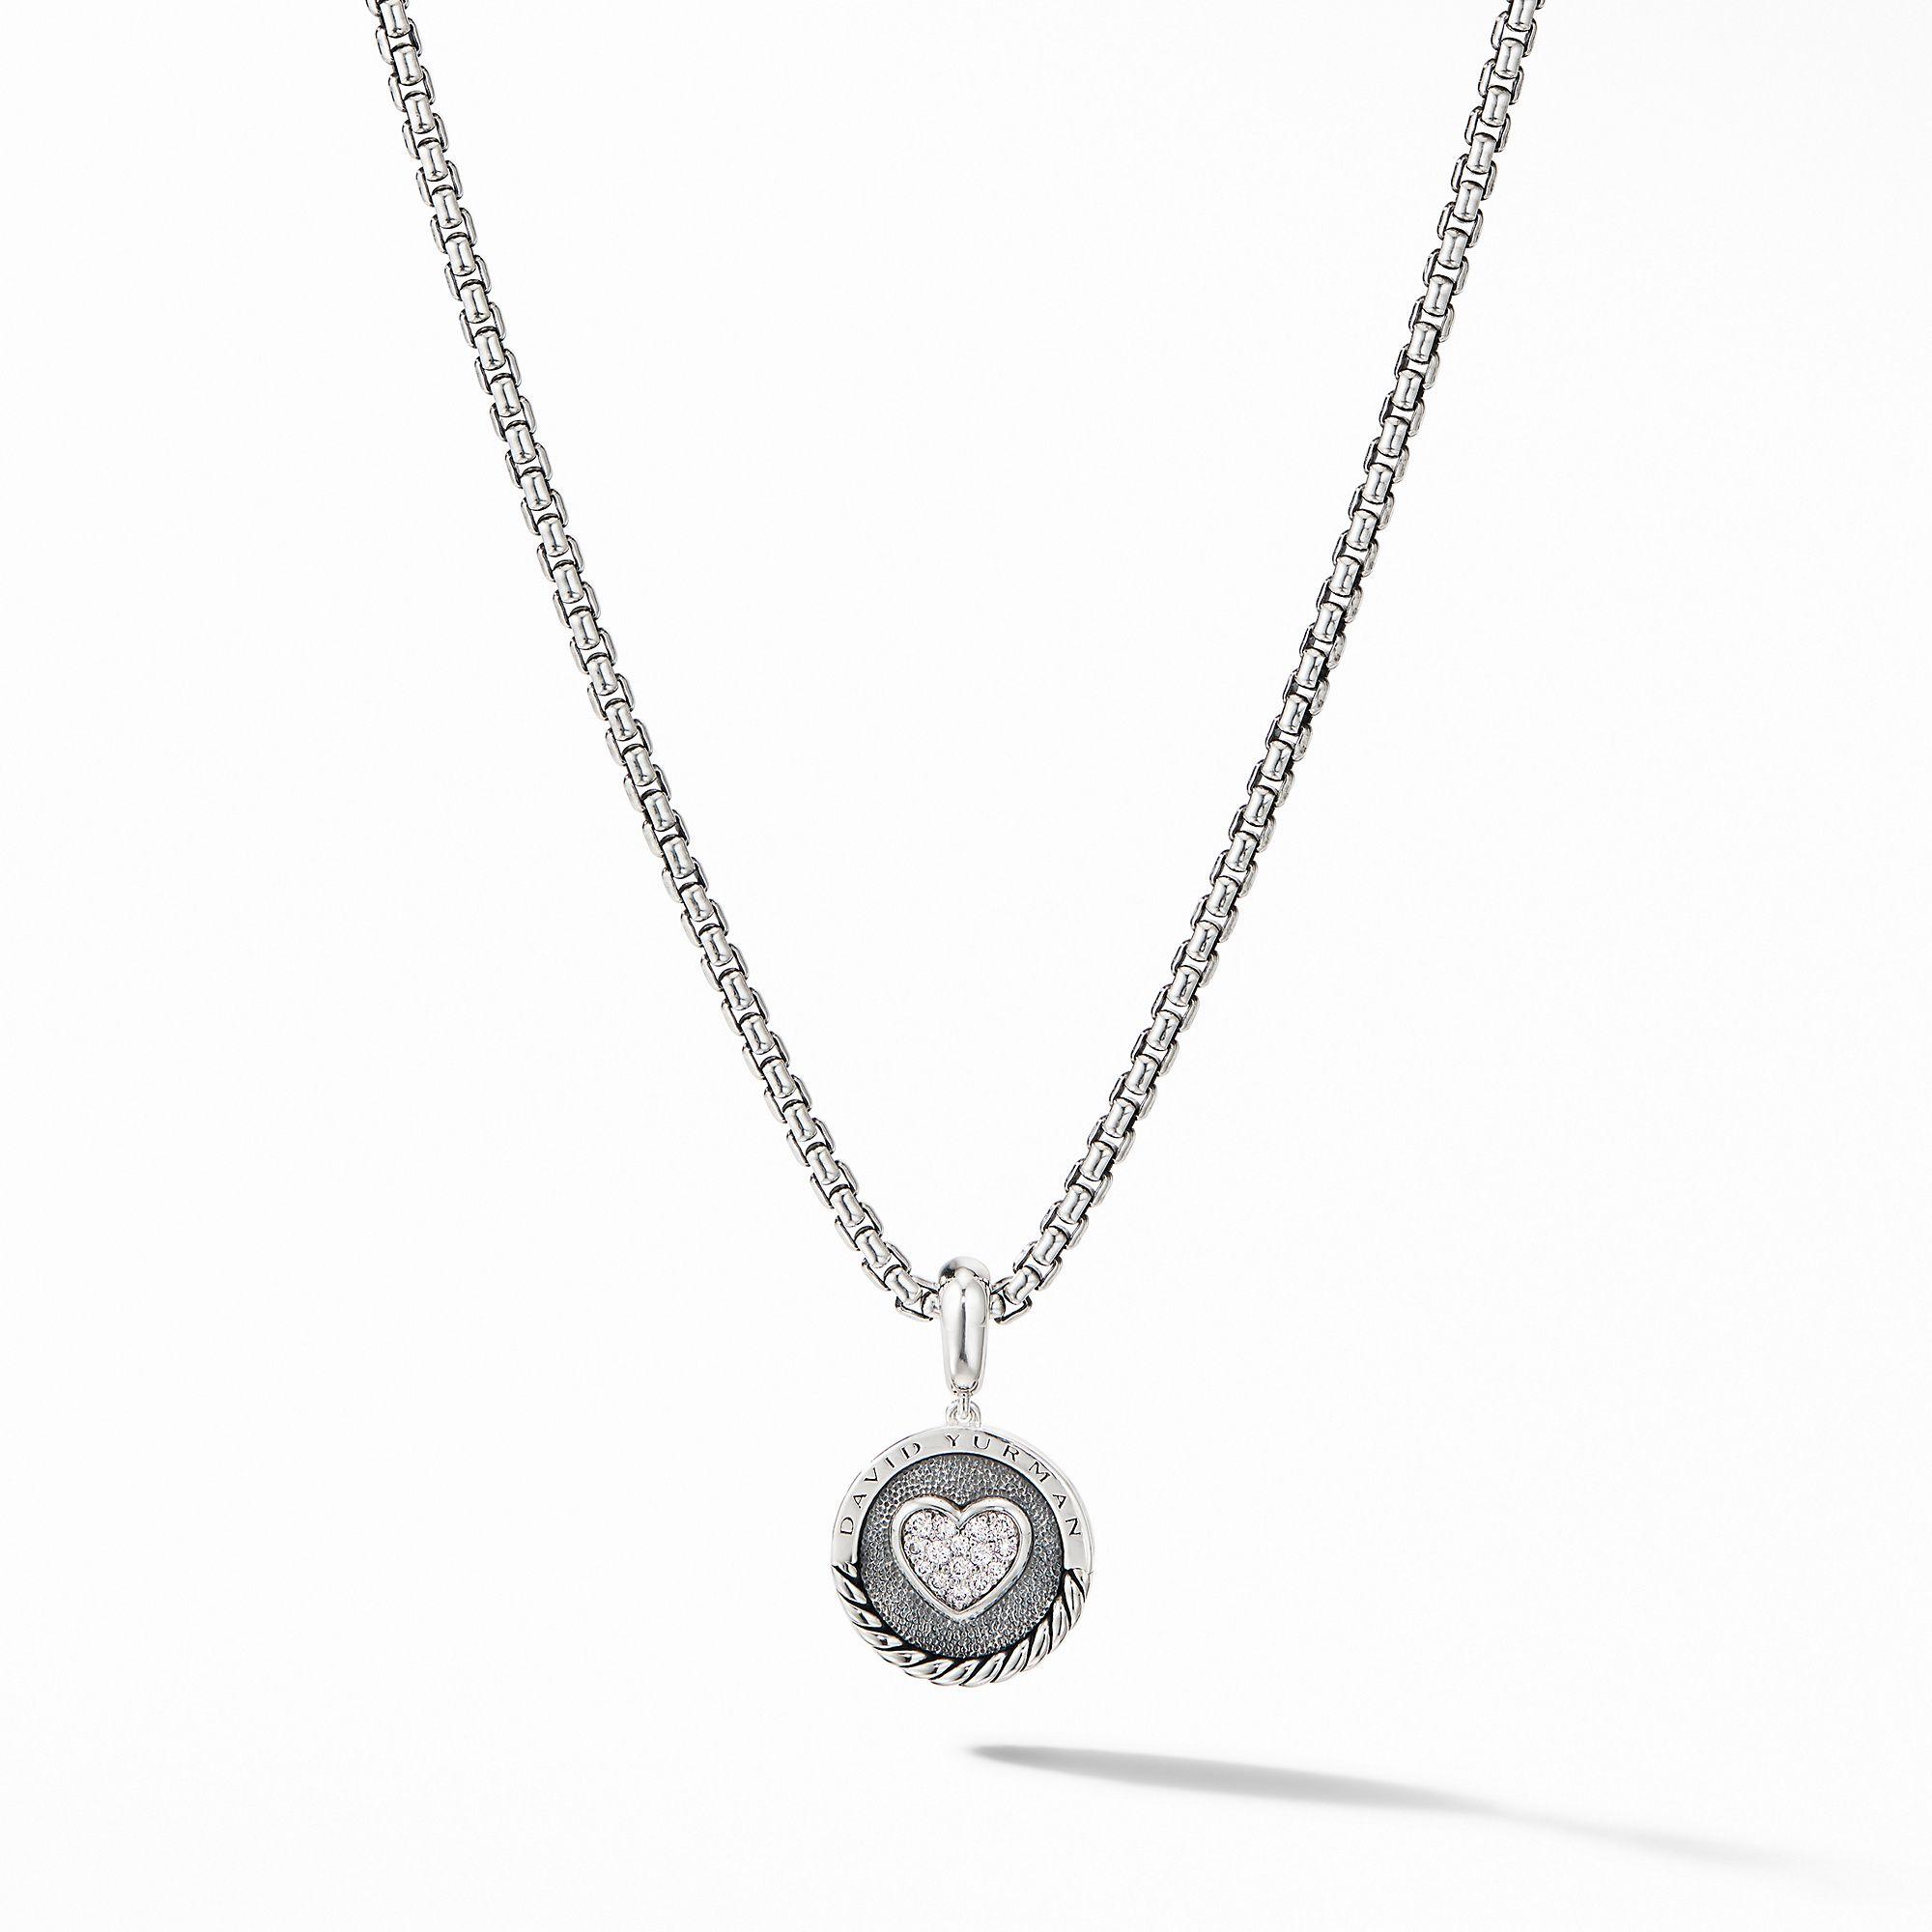 David Yurman Heart Charm Pendant in Sterling Silver with Diamonds